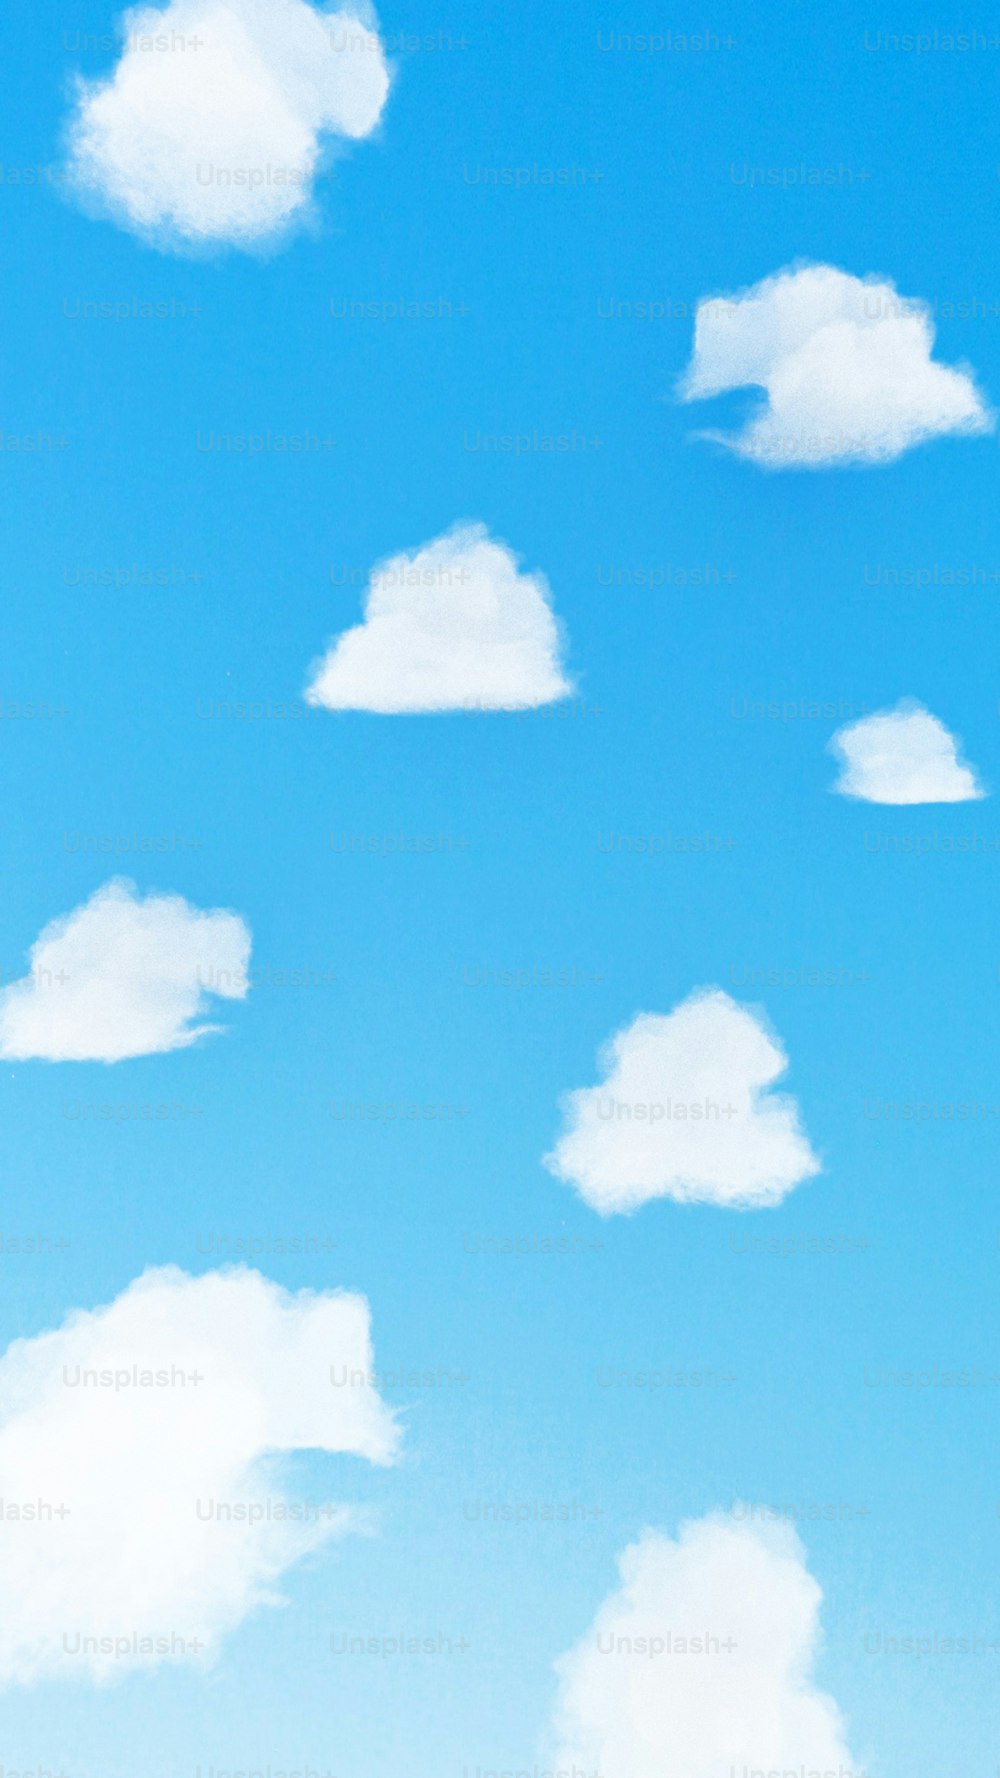 Un grupo de nubes blancas en un cielo azul